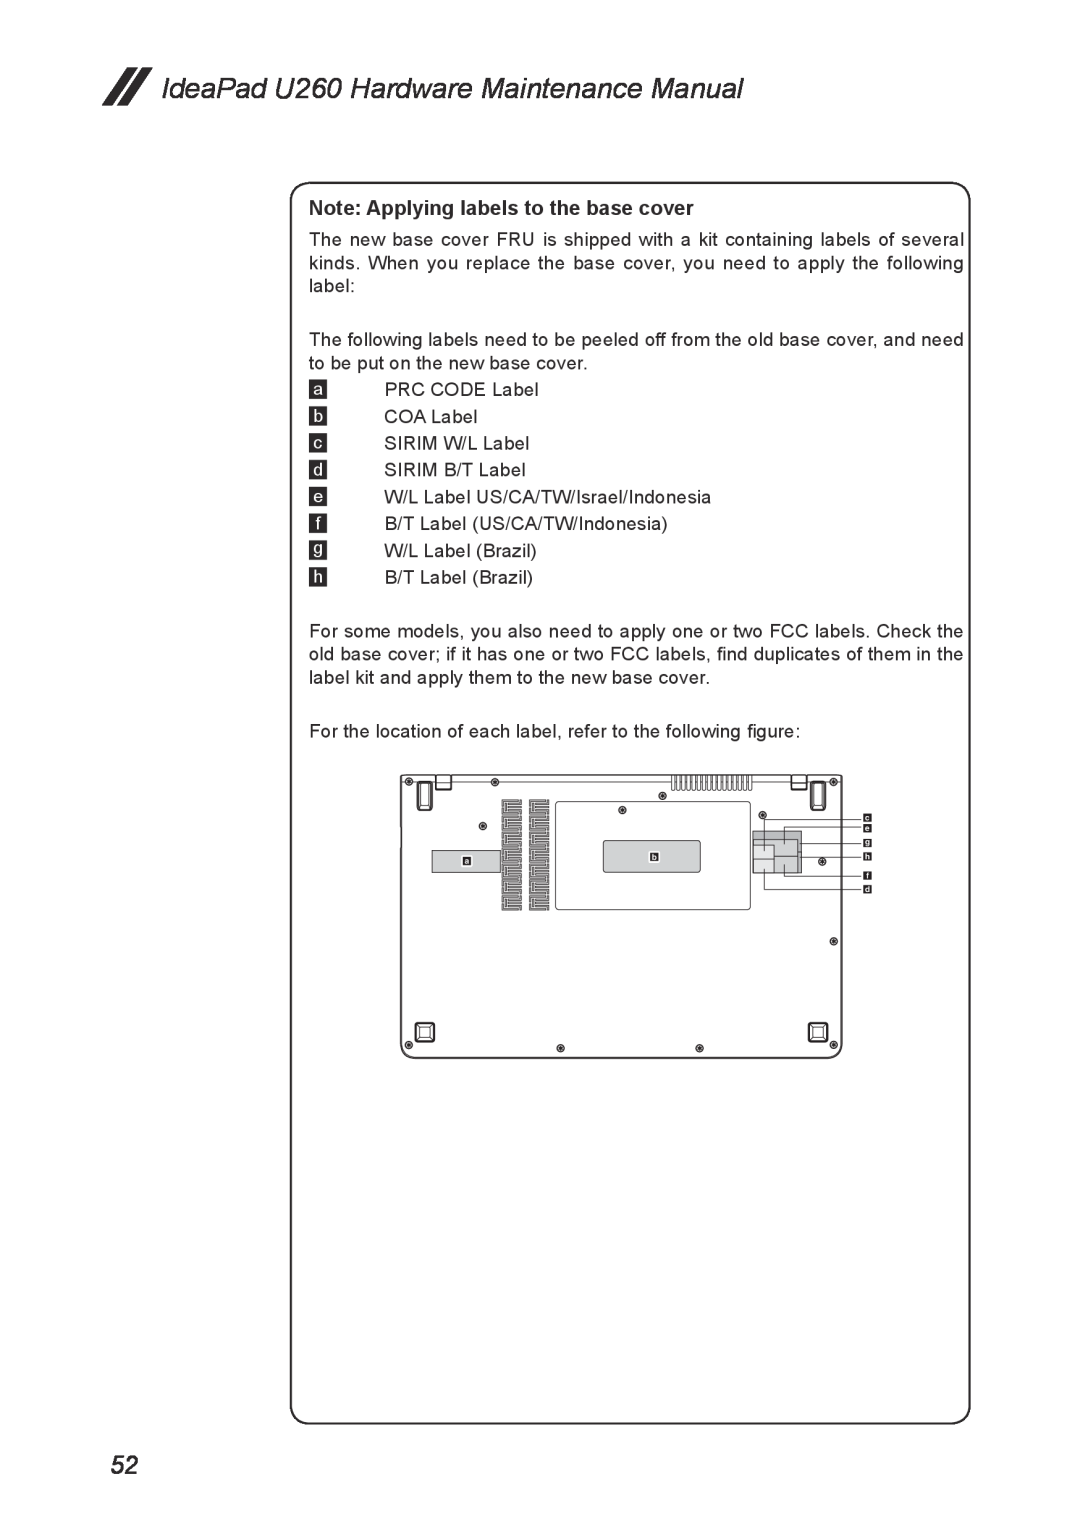 Lenovo manual Note Applying labels to the base cover, IdeaPad U260 Hardware Maintenance Manual 